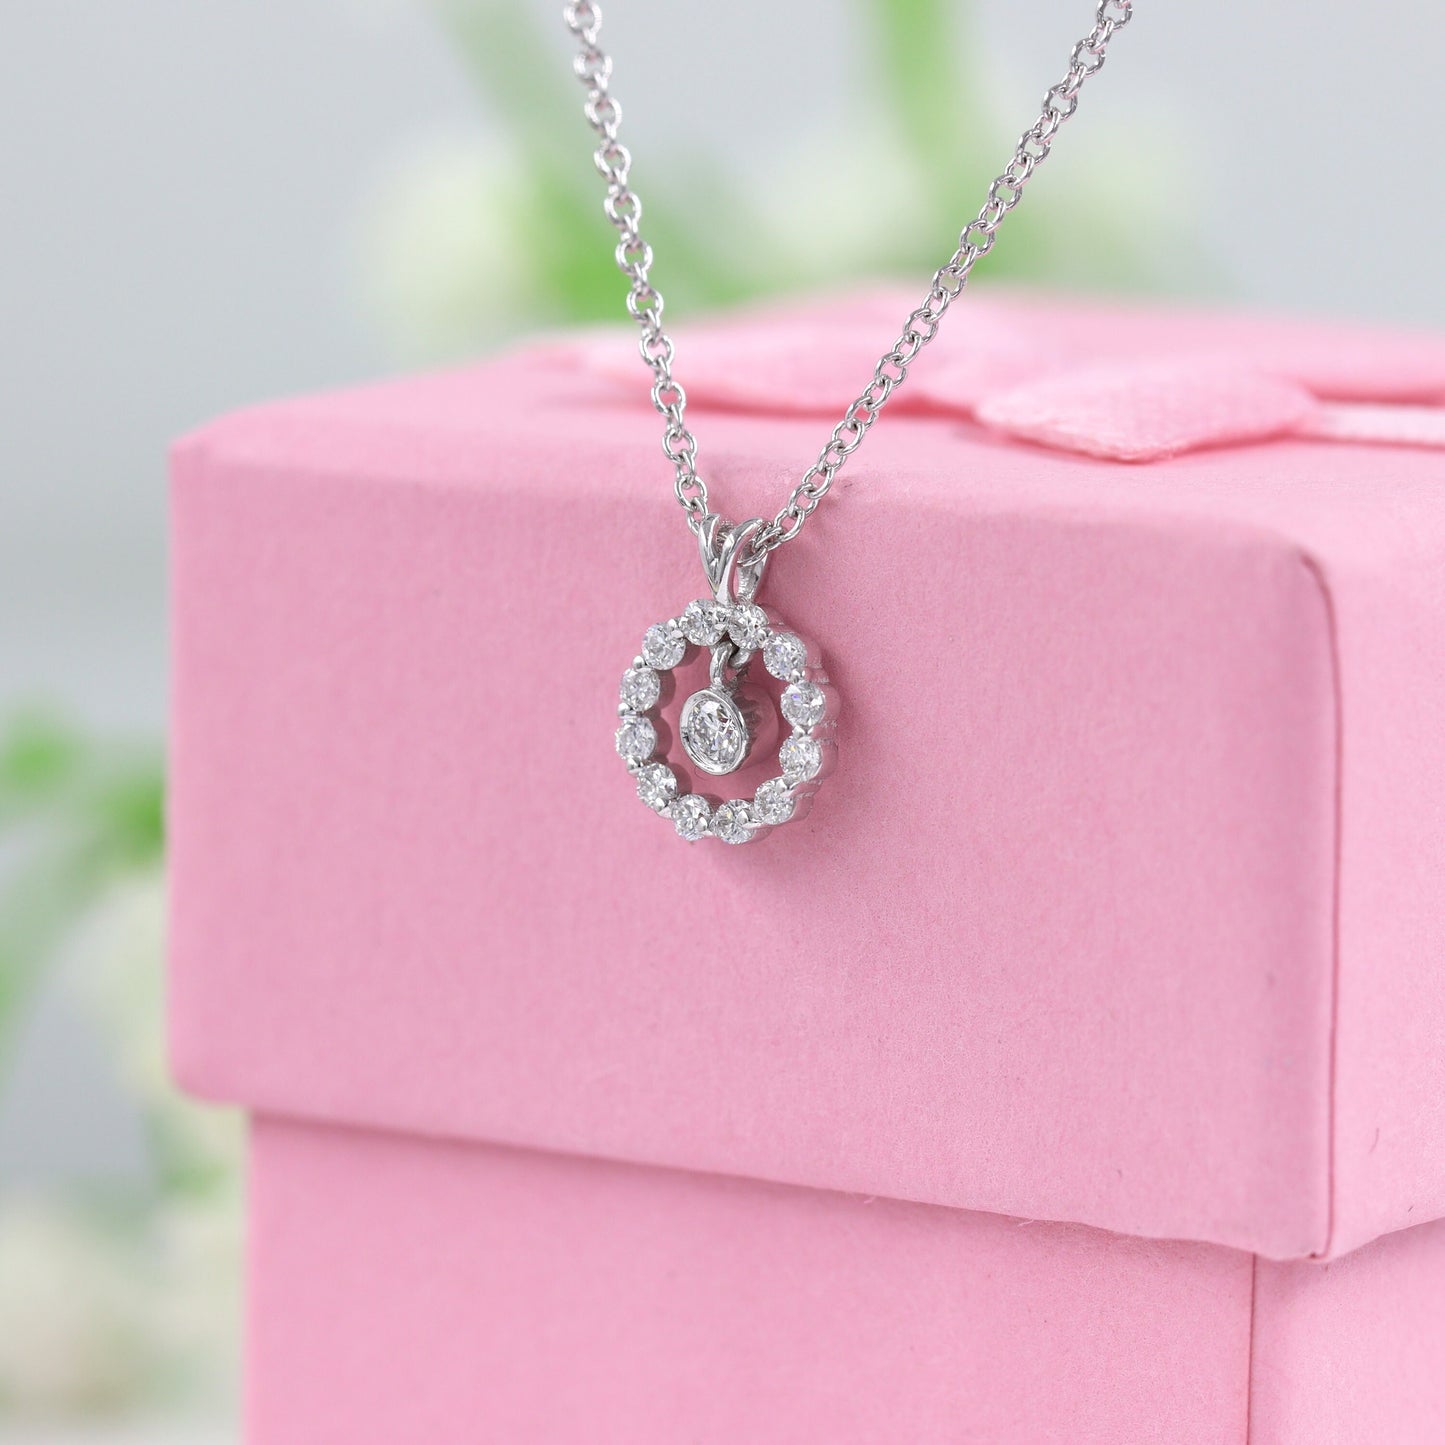 Round Diamond Necklace / Circle Diamond Charm / Bezel Pendant / Bezel Dangle Necklace / 14k Gold Diamond Necklace / Anniversary / Gift for Her